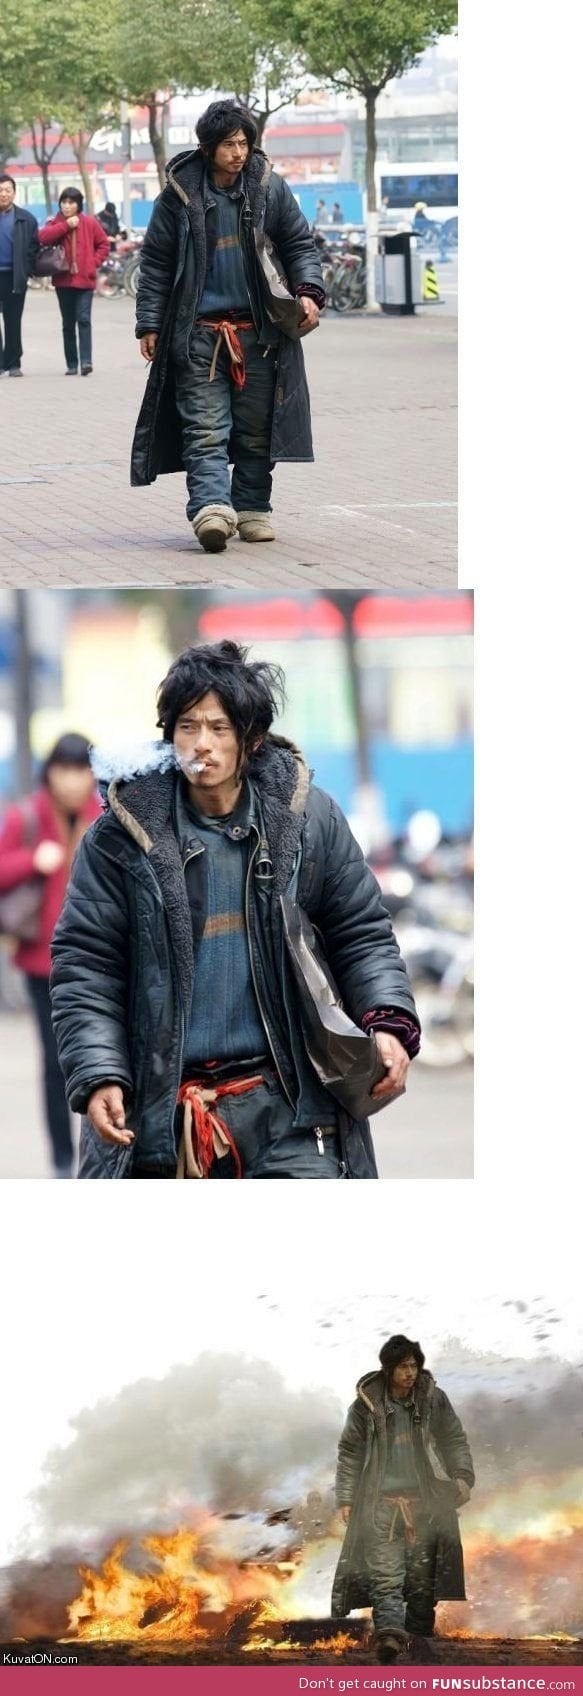 Homeless dude looks like a action hero